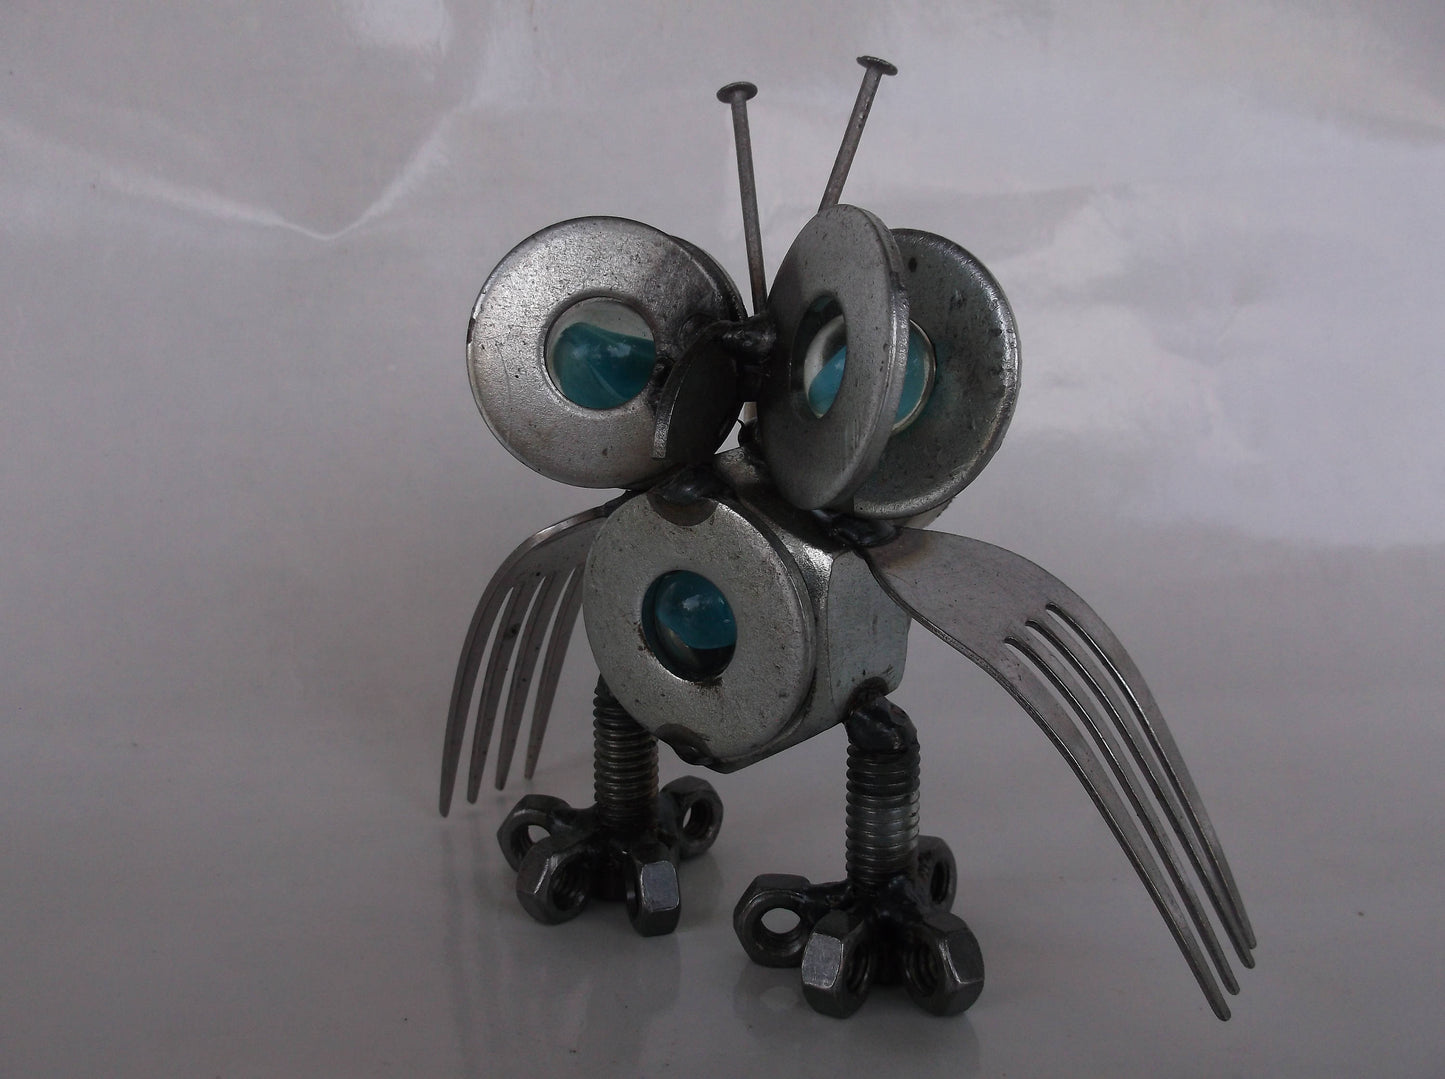 Blue Owl, Metal Sculpture up cycled magnet art